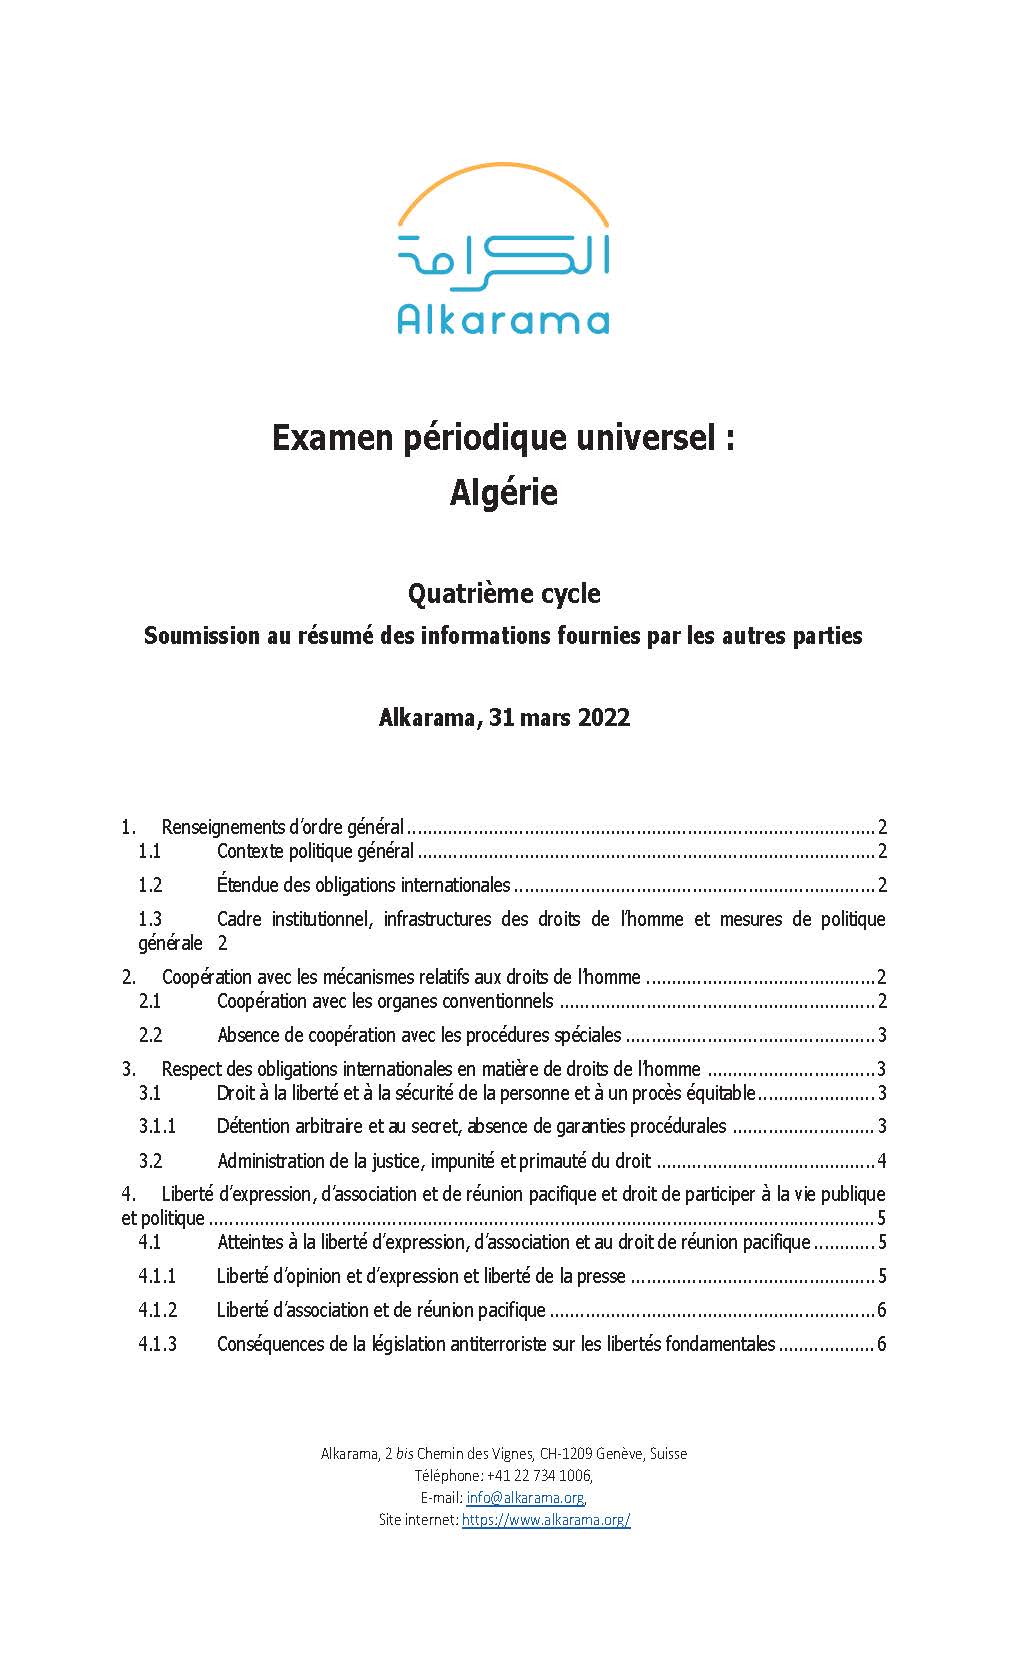 Examen périodique universel_Algérie